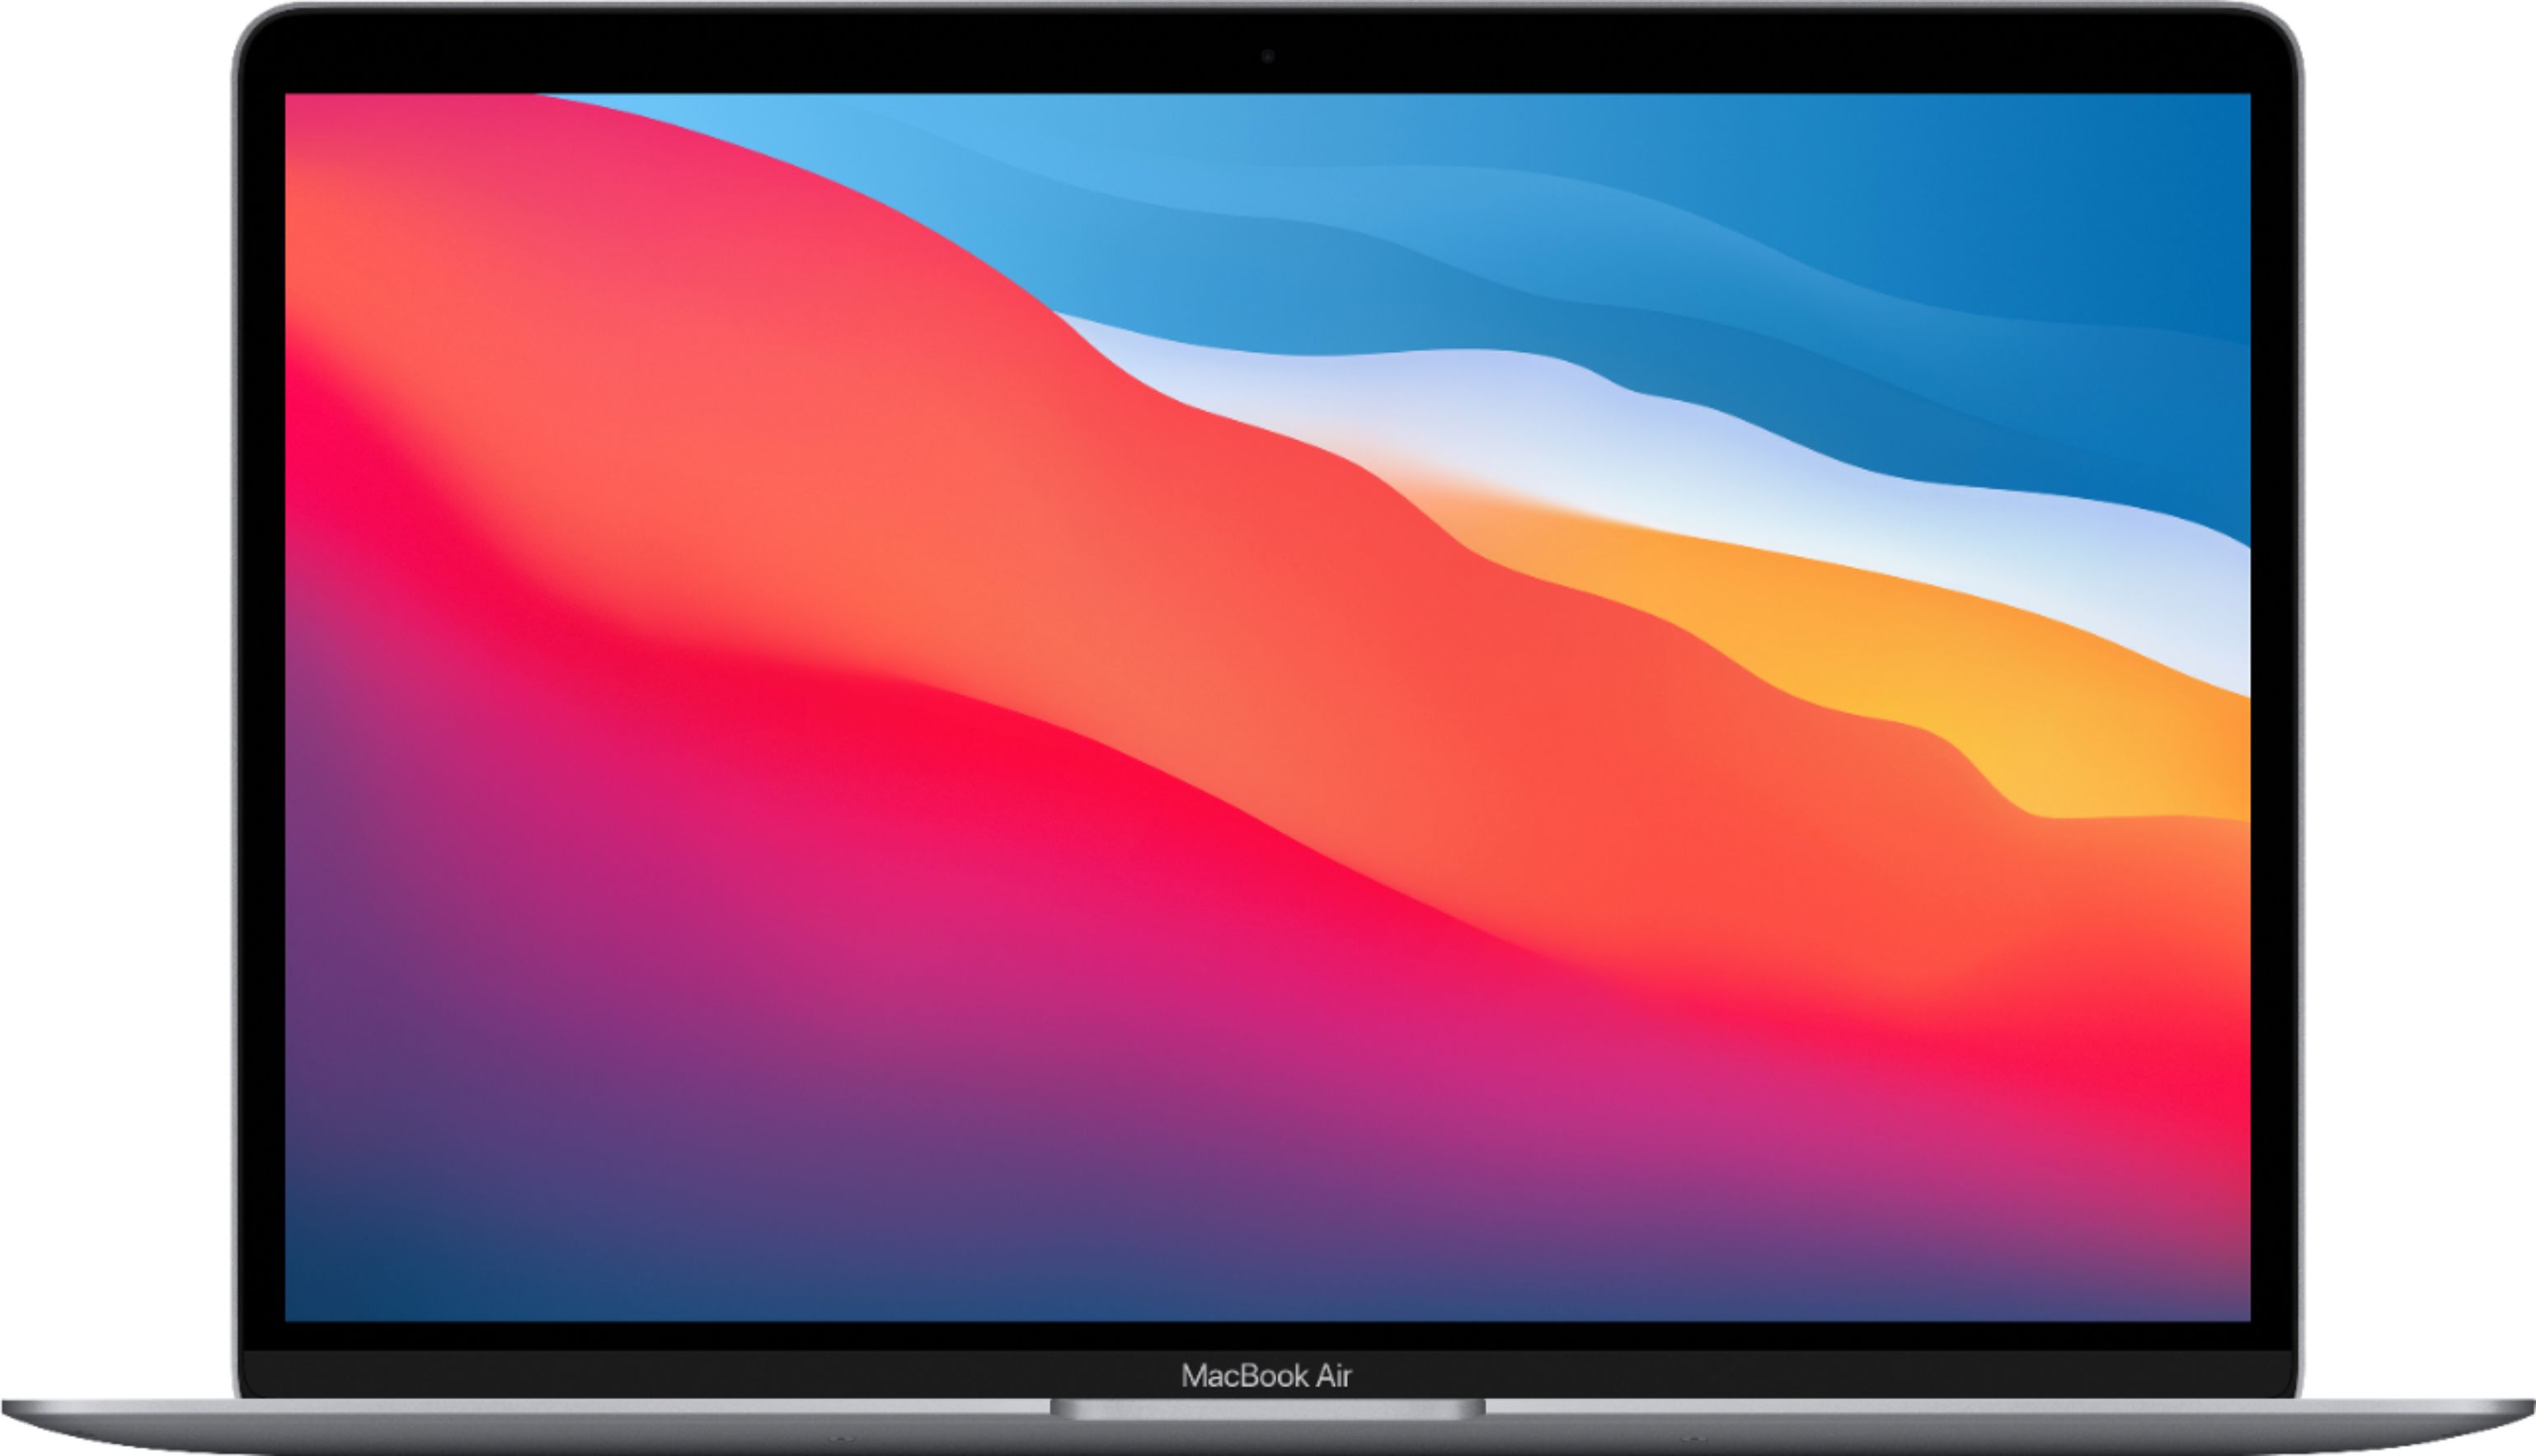 Apple MacBook Air (2020): M1 CPU, 13.3" 2560x1600, 8GB RAM, 512GB SSD $999